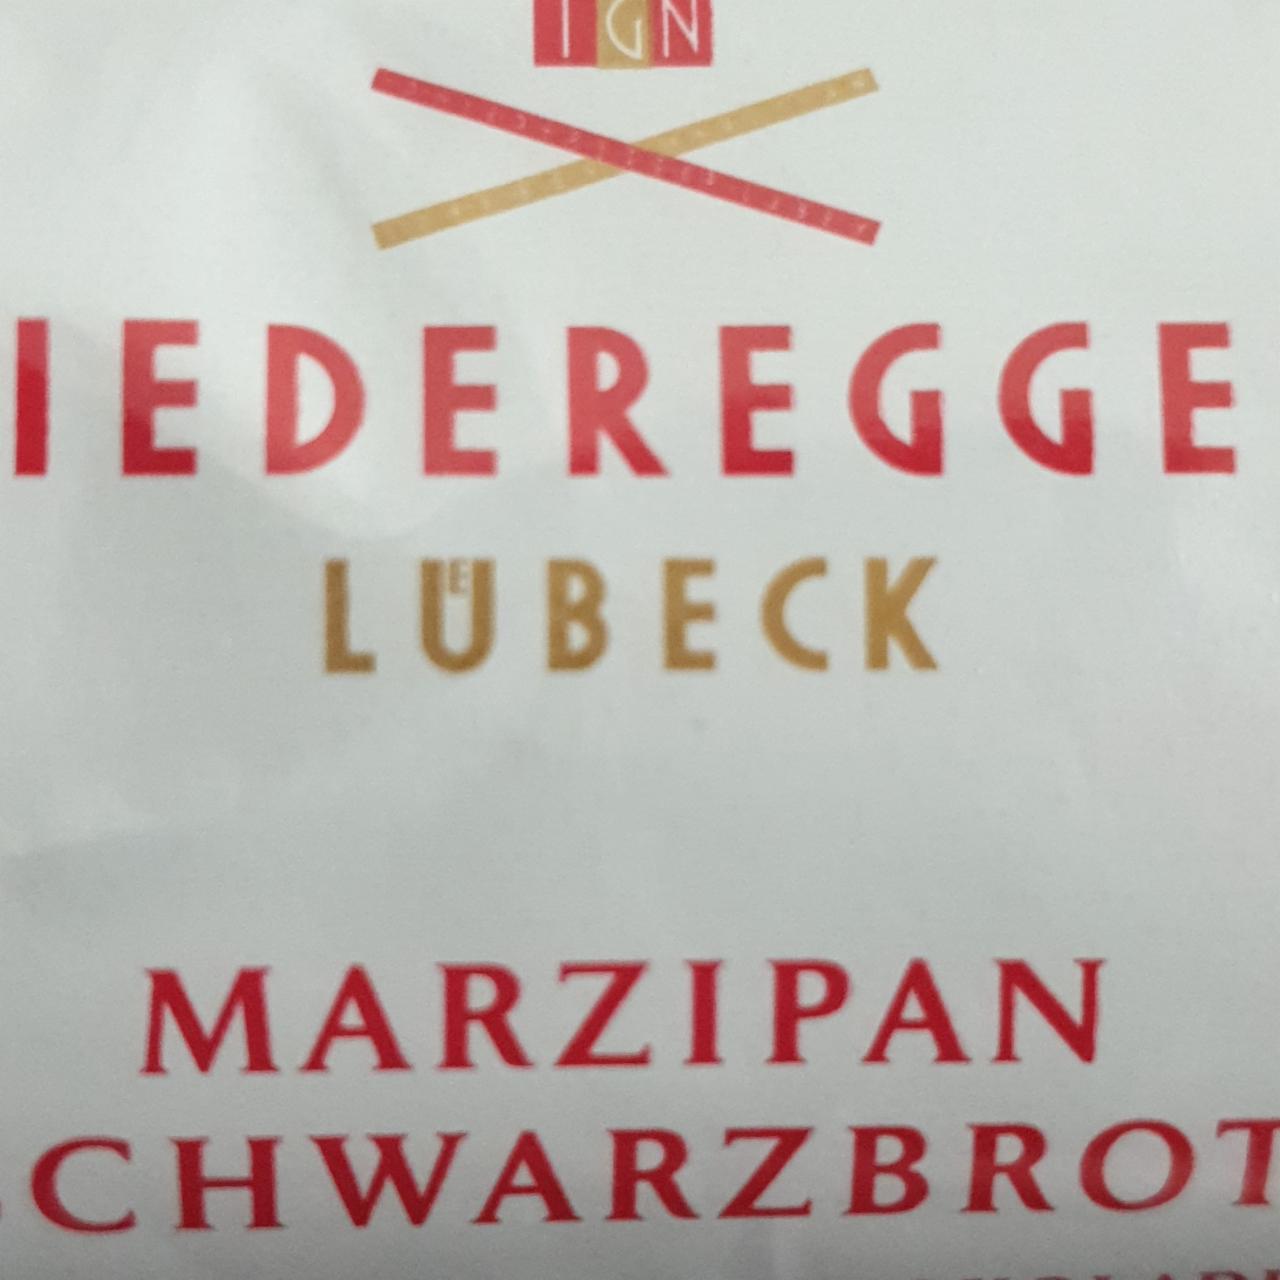 Fotografie - Lübeck Marzipan Schwarzbrot Niederegger